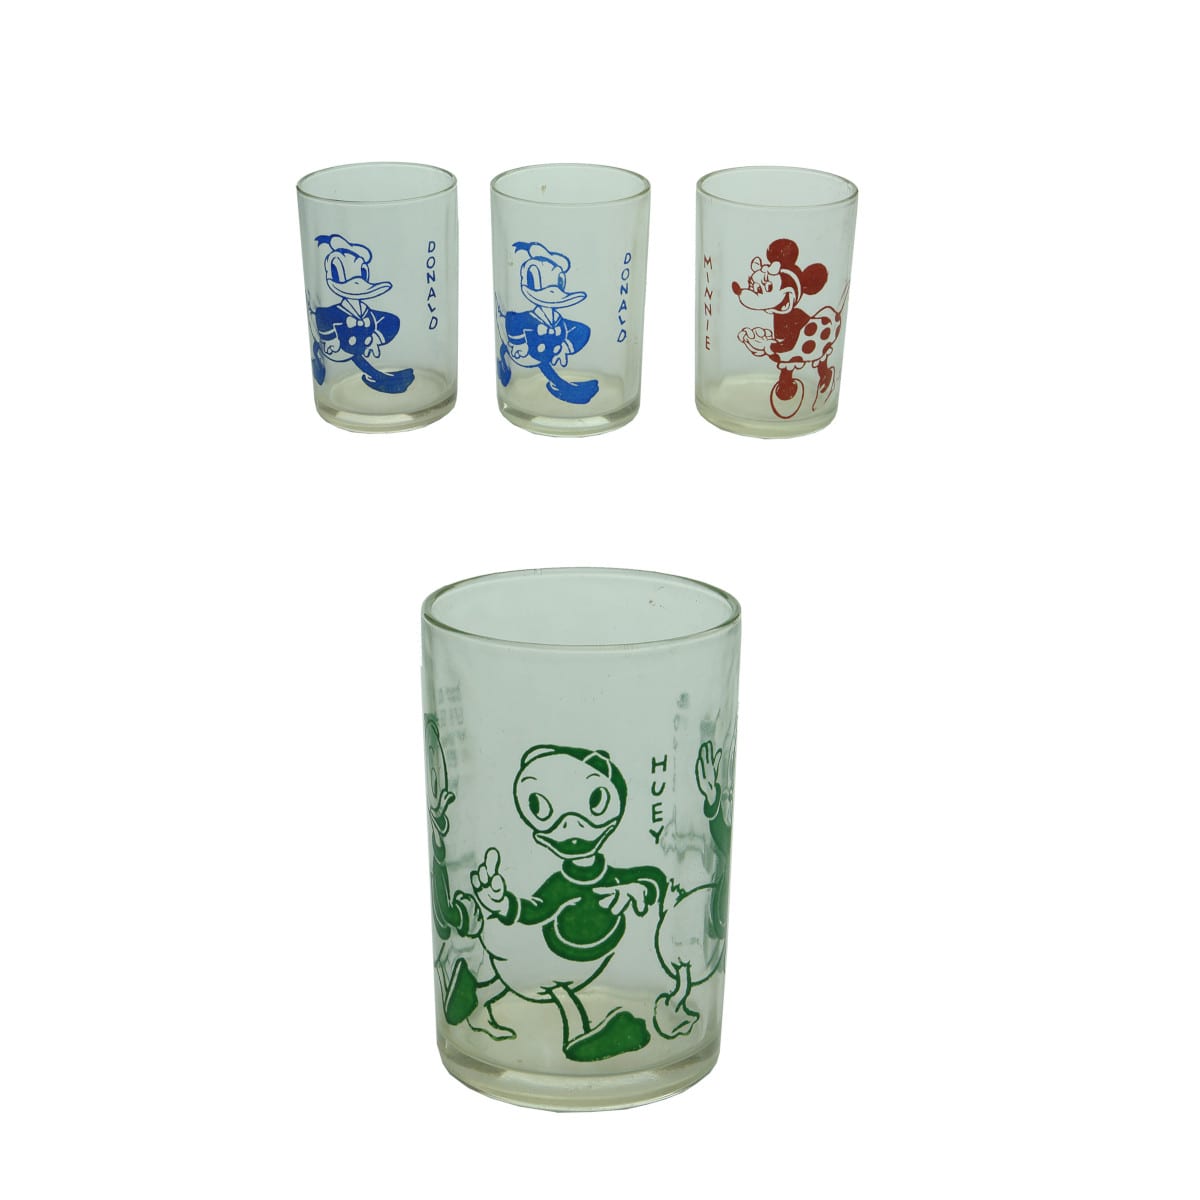 Four Ceramic Label Disney Glasses: 2 x Donald Duck; Dewey, Huey & Louie; Minnie Mouse.